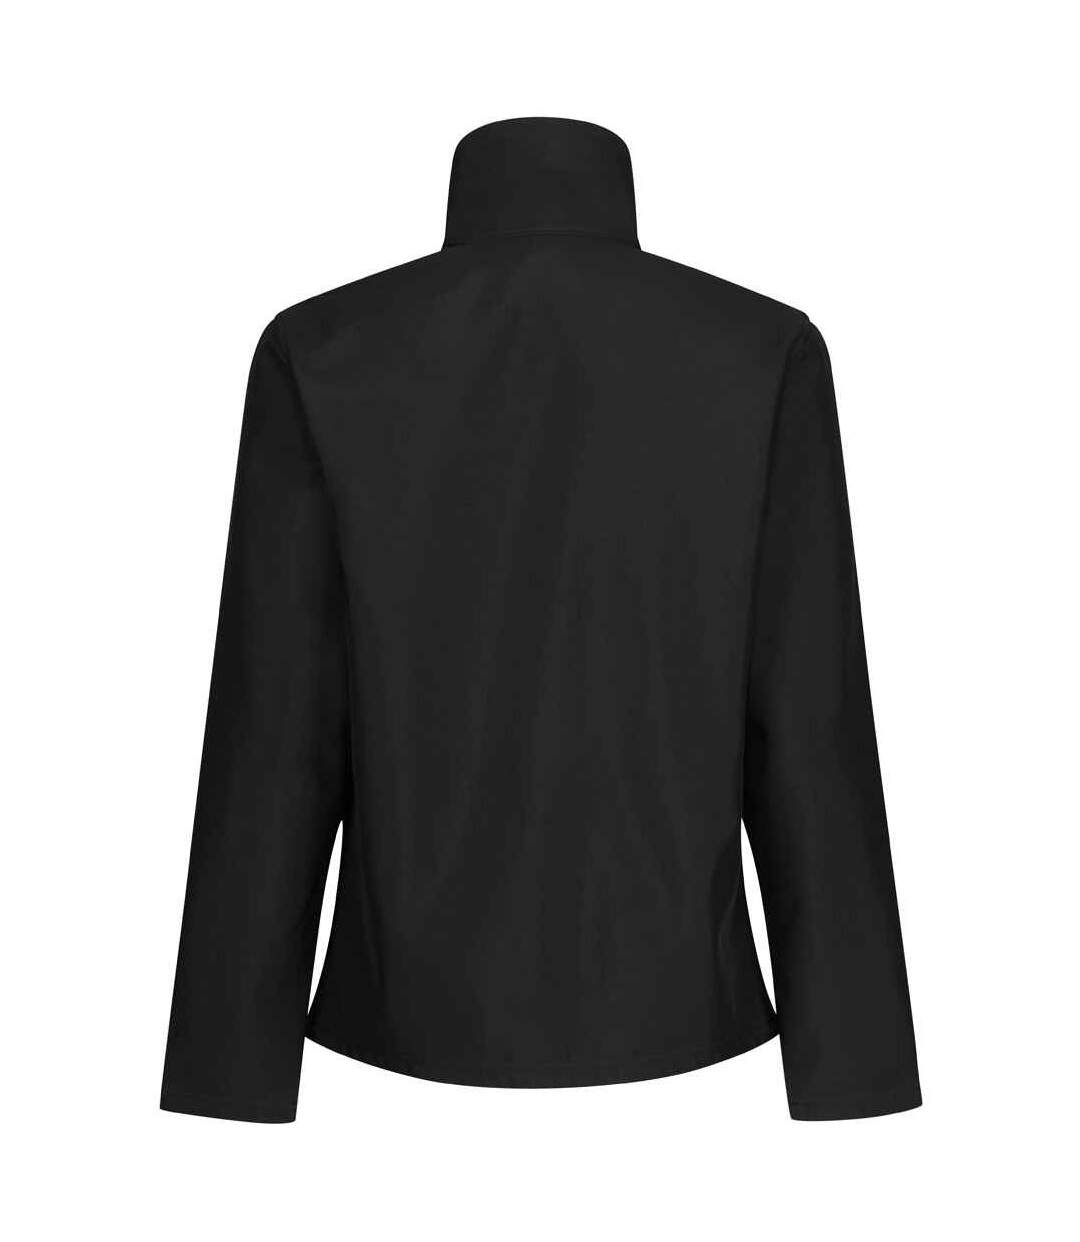 Regatta Mens Pro Cover Up Soft Shell Jacket (Black) - UTPC4437